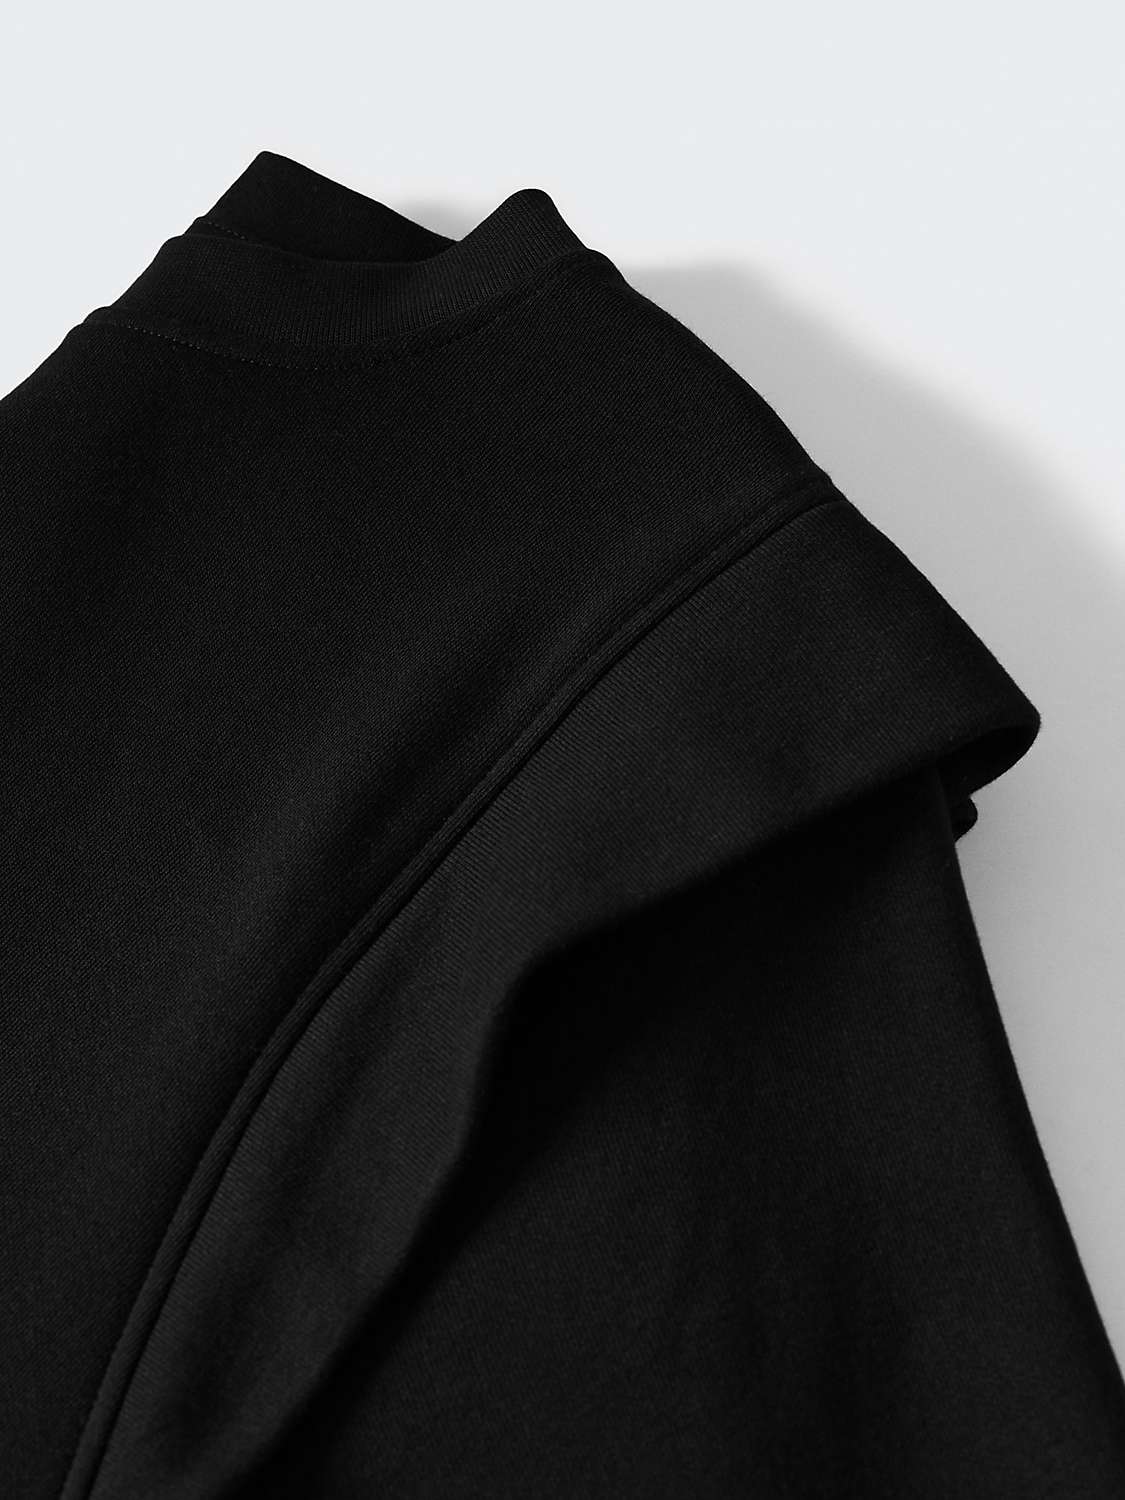 Mango Hombro Cotton Blend Sweatshirt, Black at John Lewis & Partners